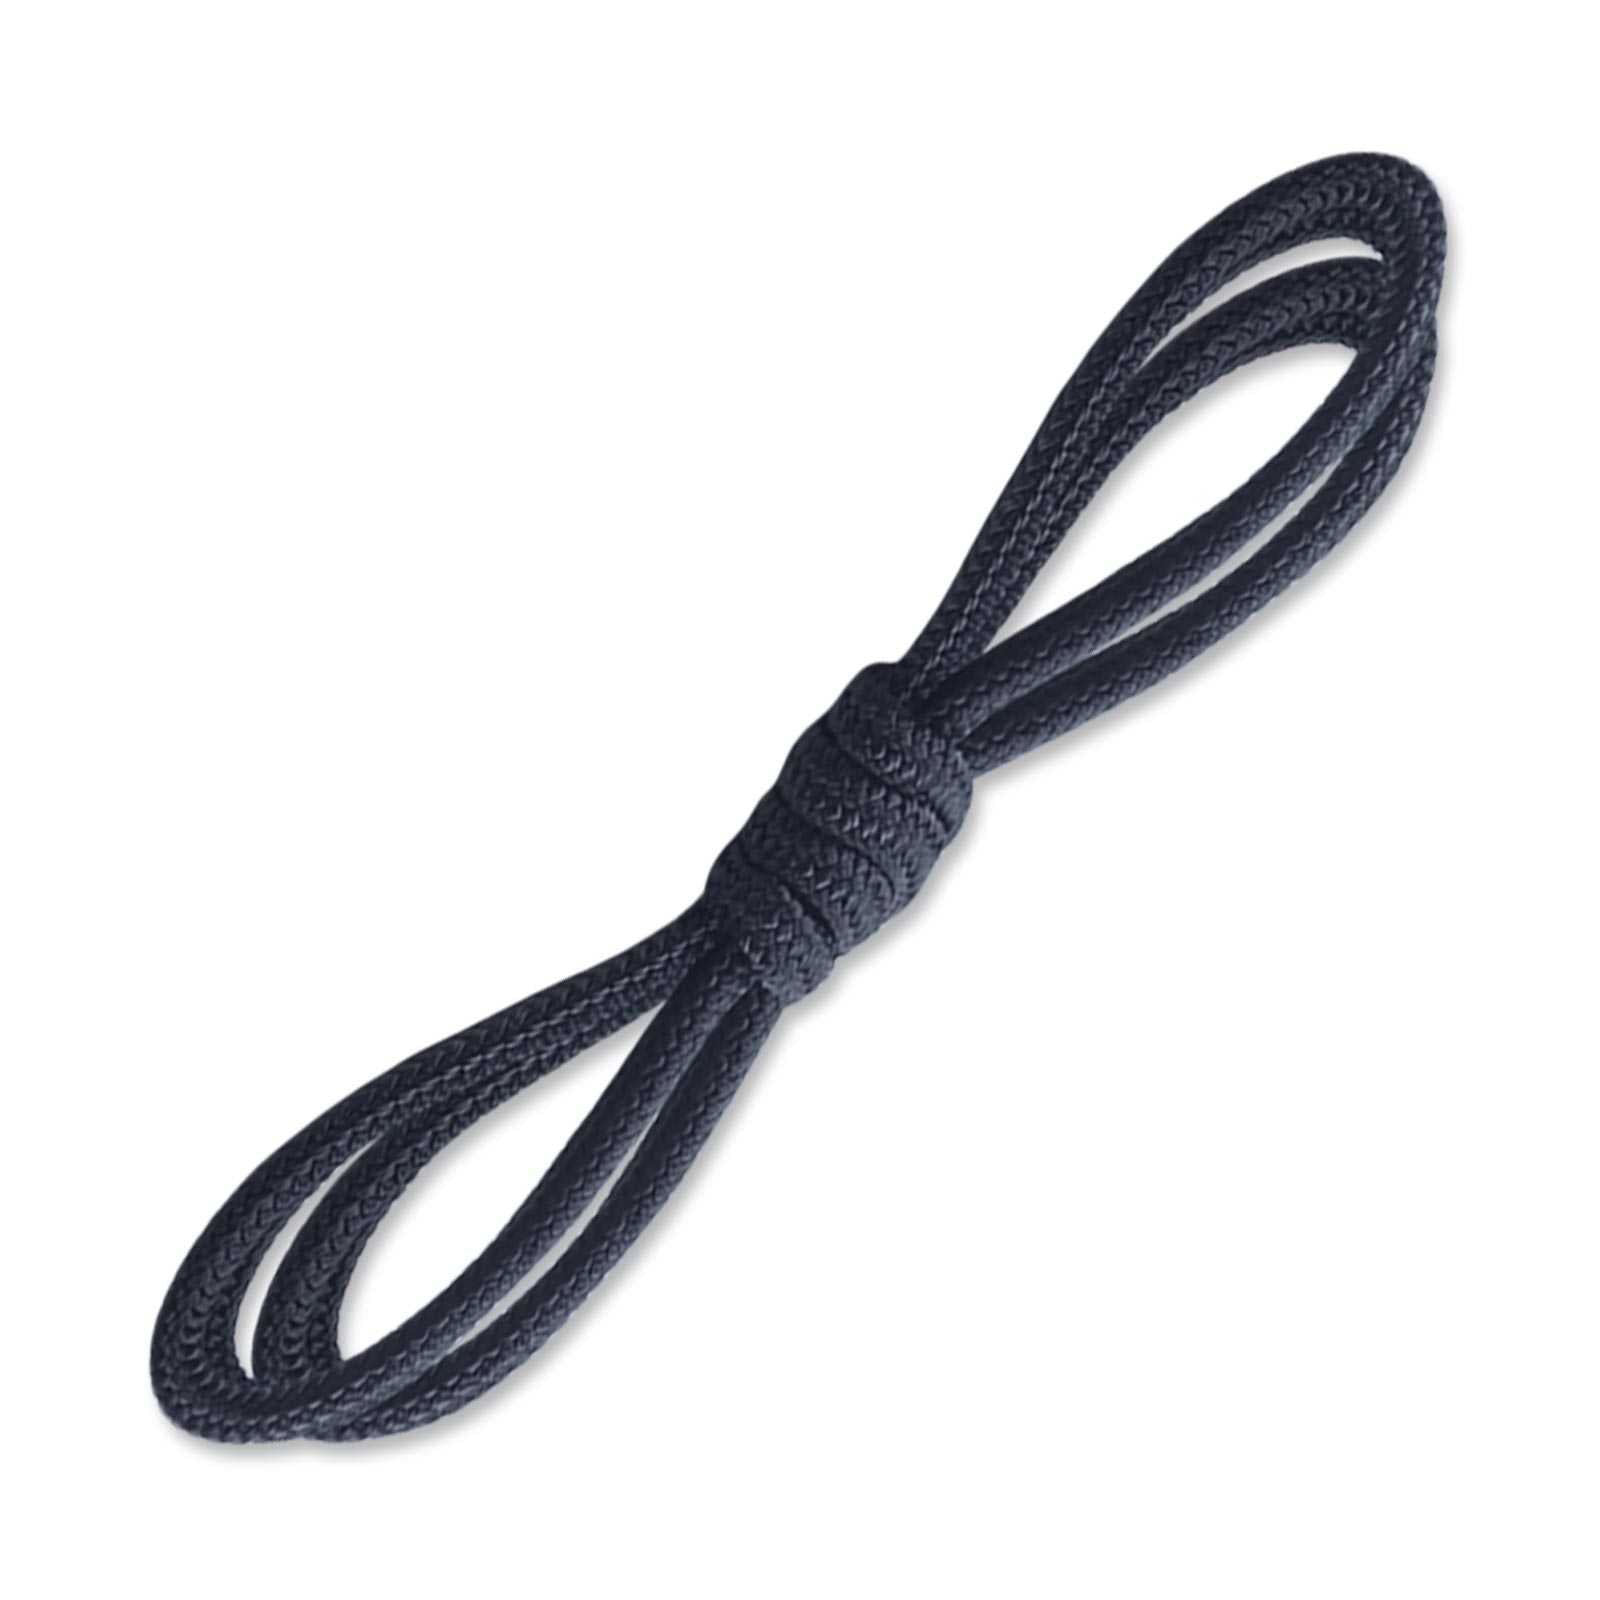 Buy Black Nylon Braided Rope Online - 3/8